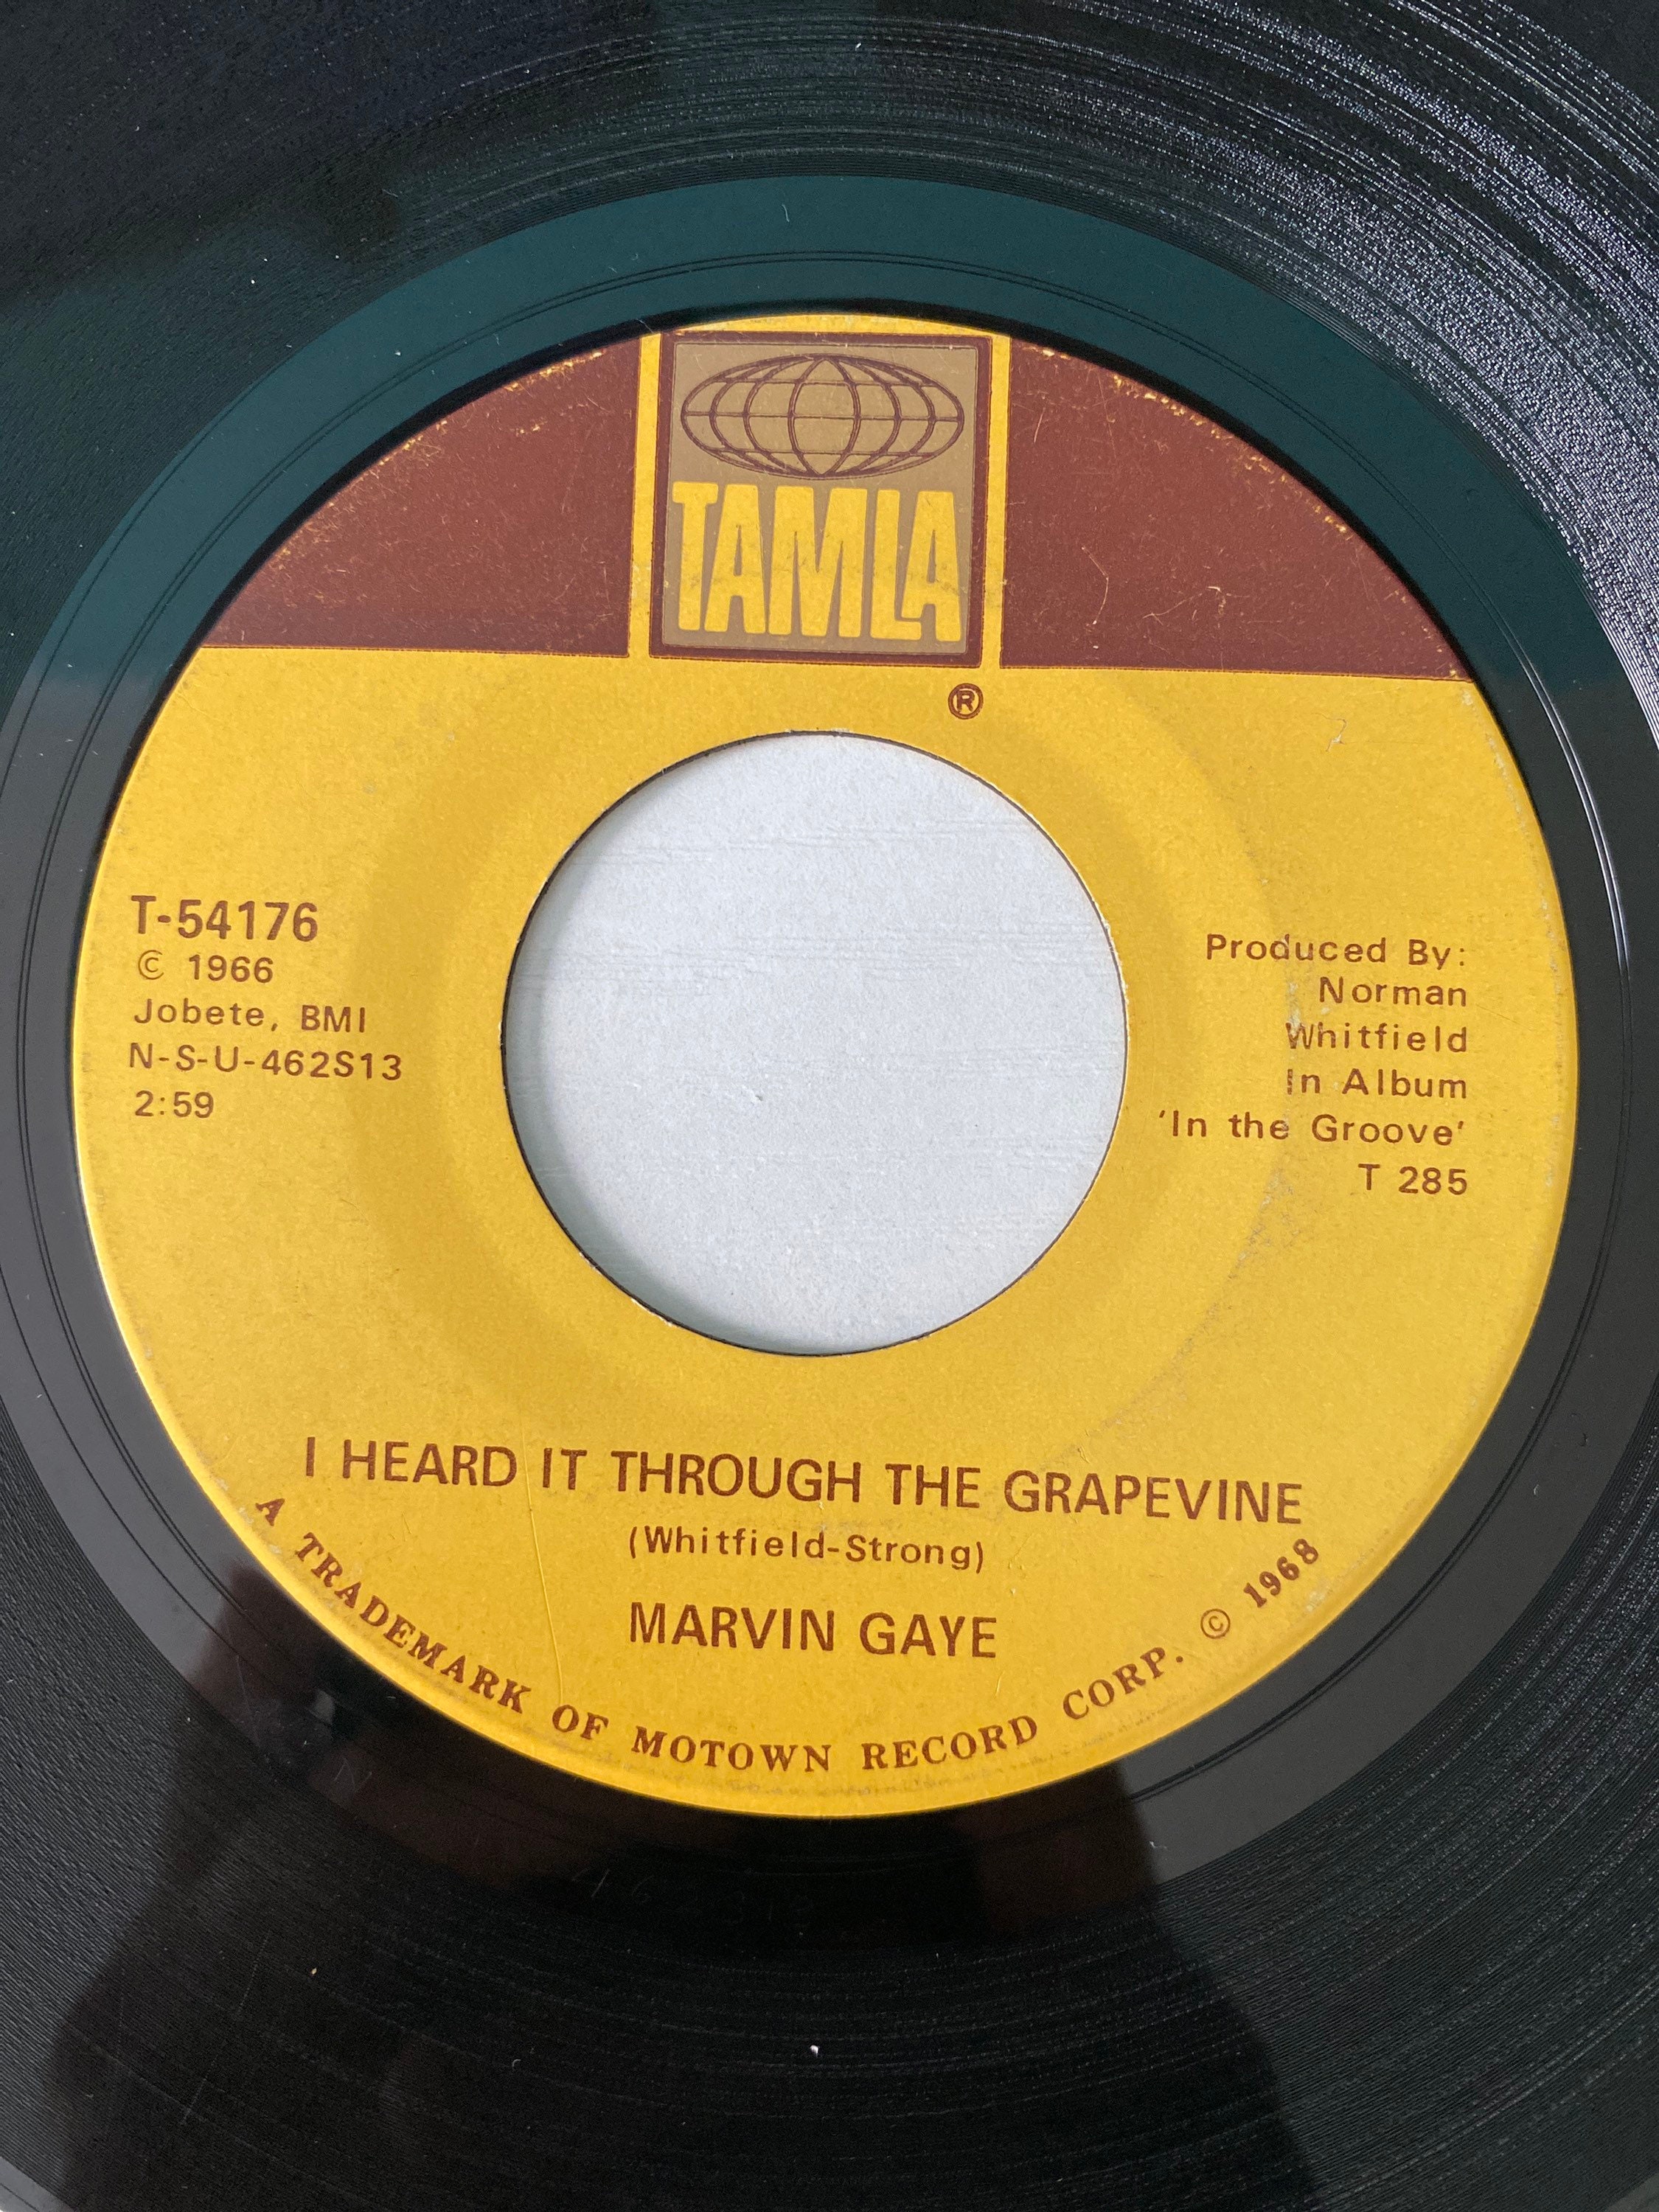 Marvin Gaye 45 vinyl